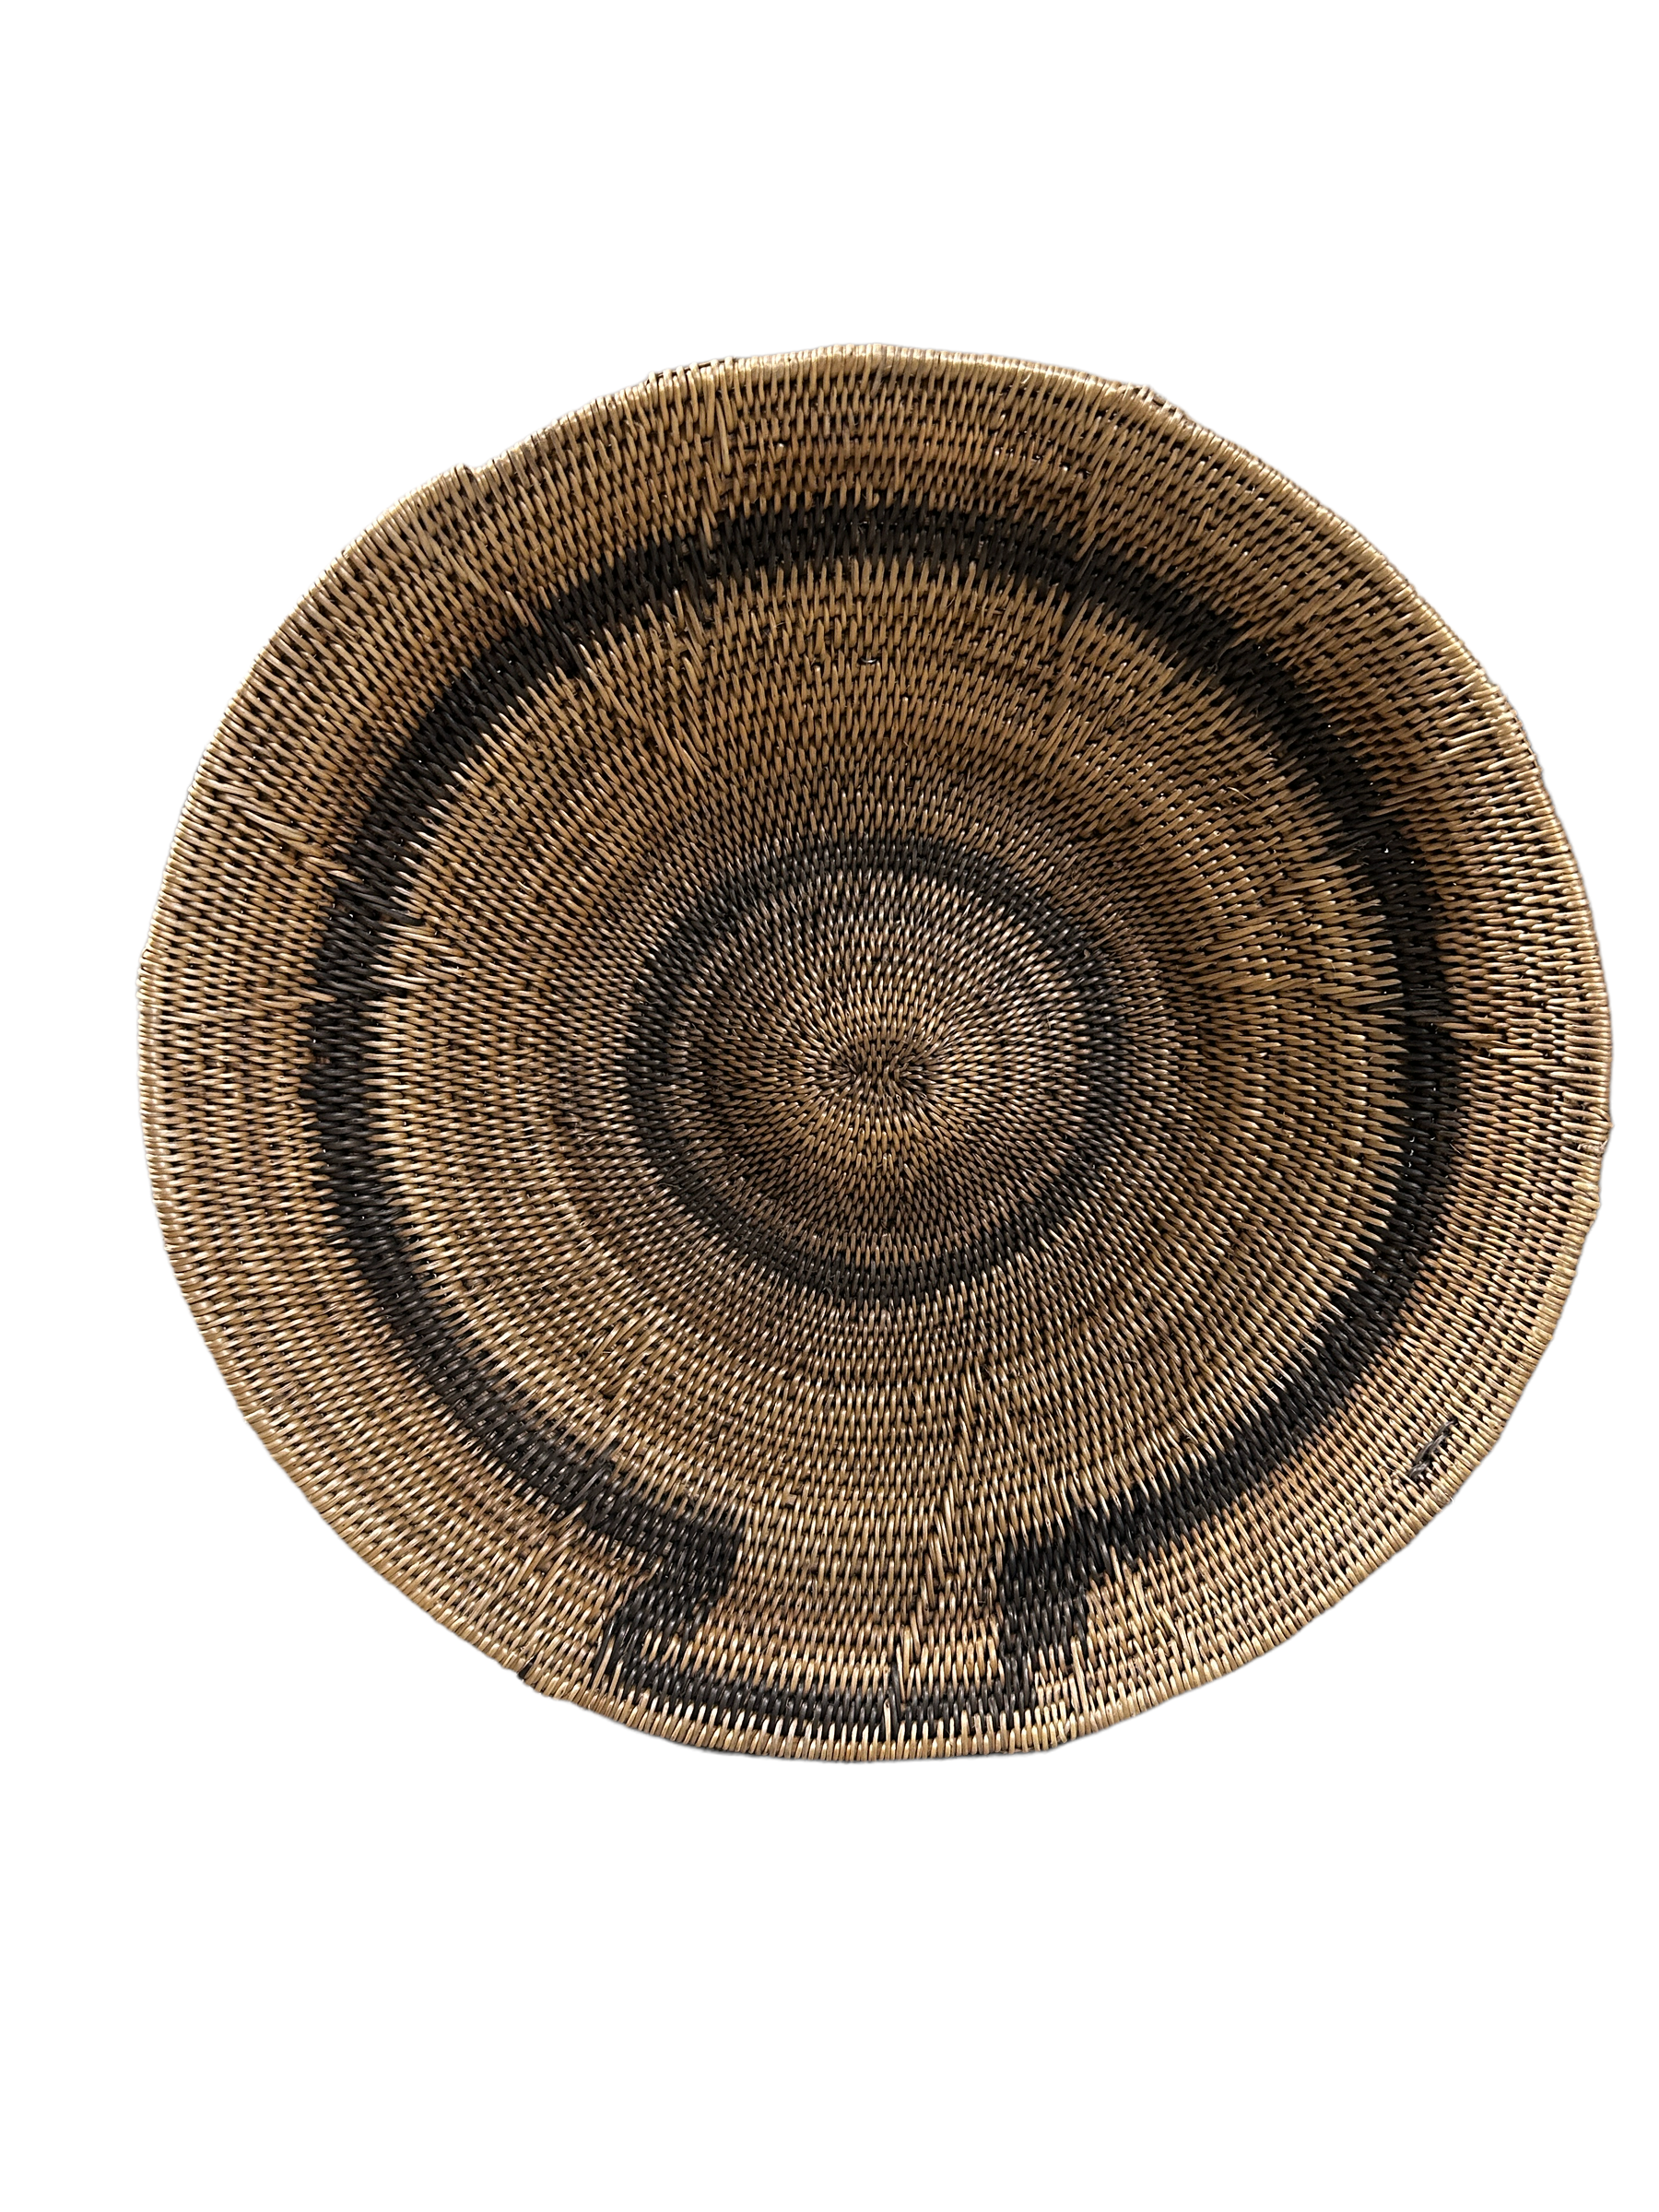 botanicalboysuk Makenge Winnowing Basket - Zambia (33.12)